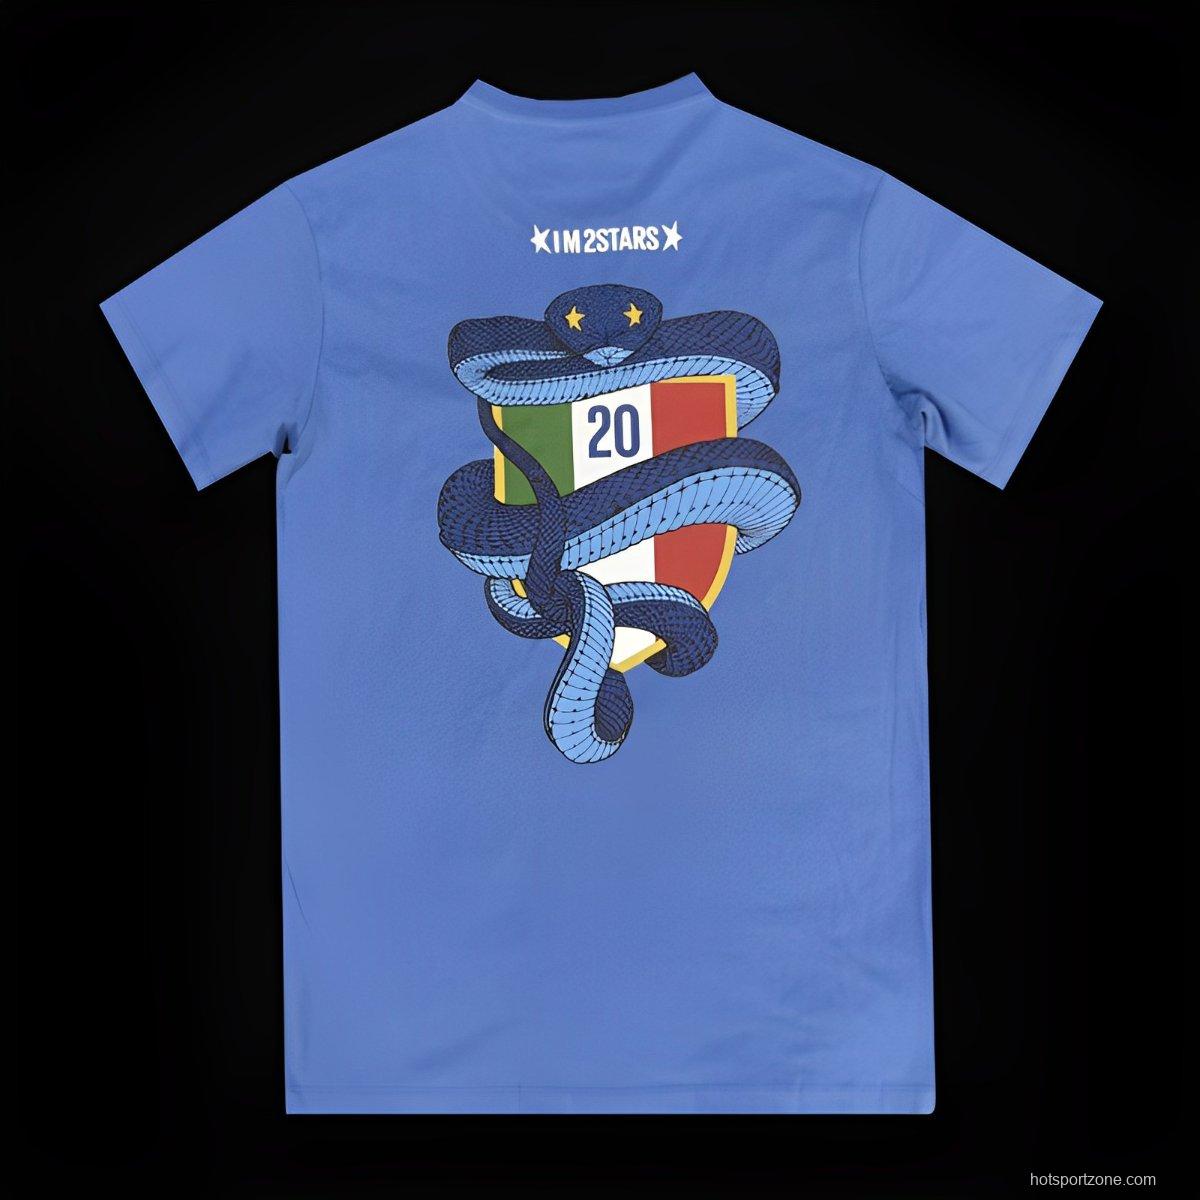 23/24 Inter Milan CAMPIONI D'ITALIA Blue T-Shirts With Snake Pattern